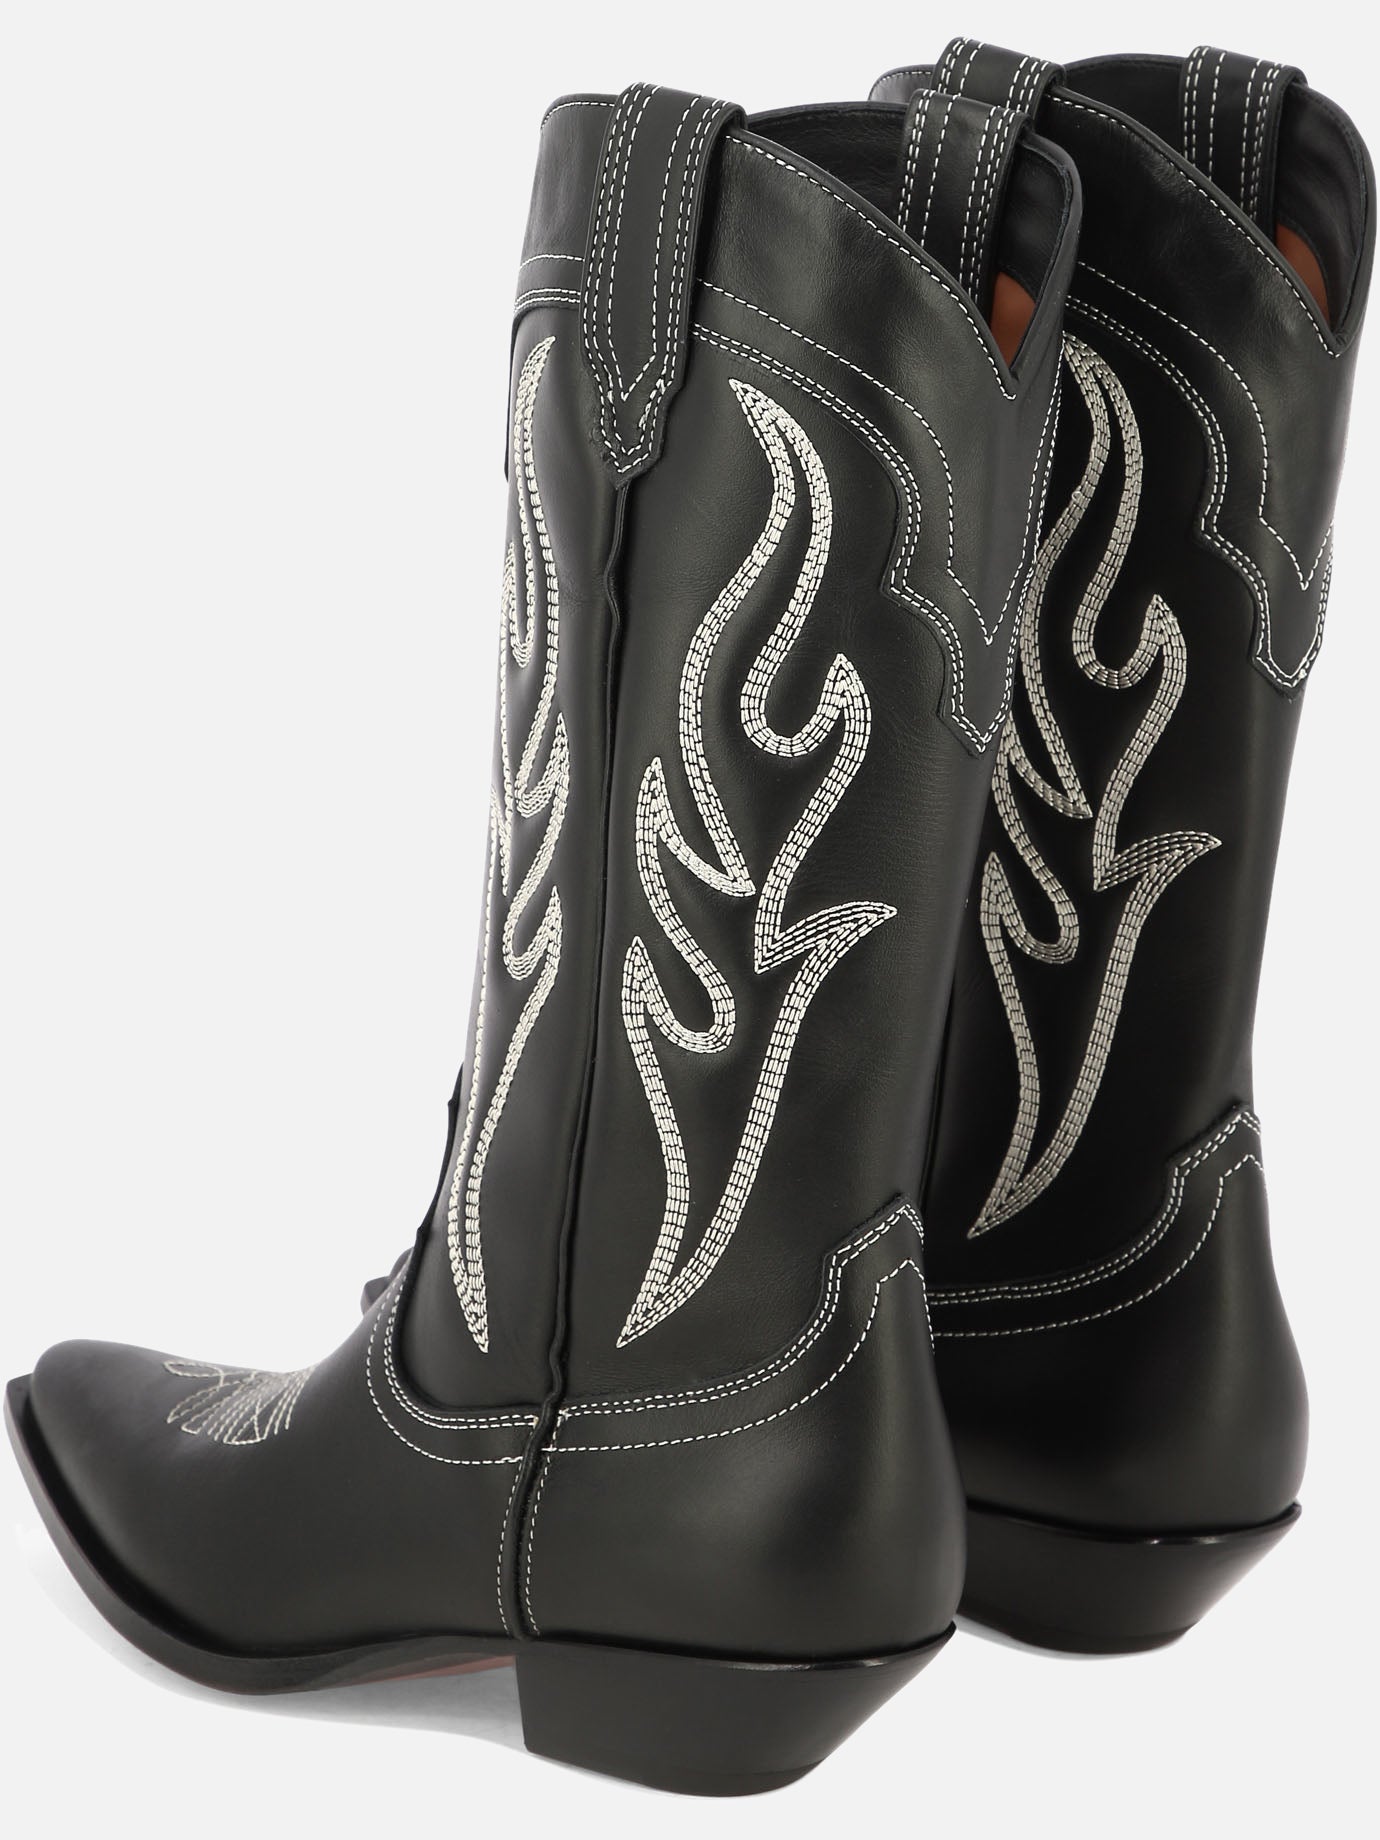 "Santa Fè" cowboy boots